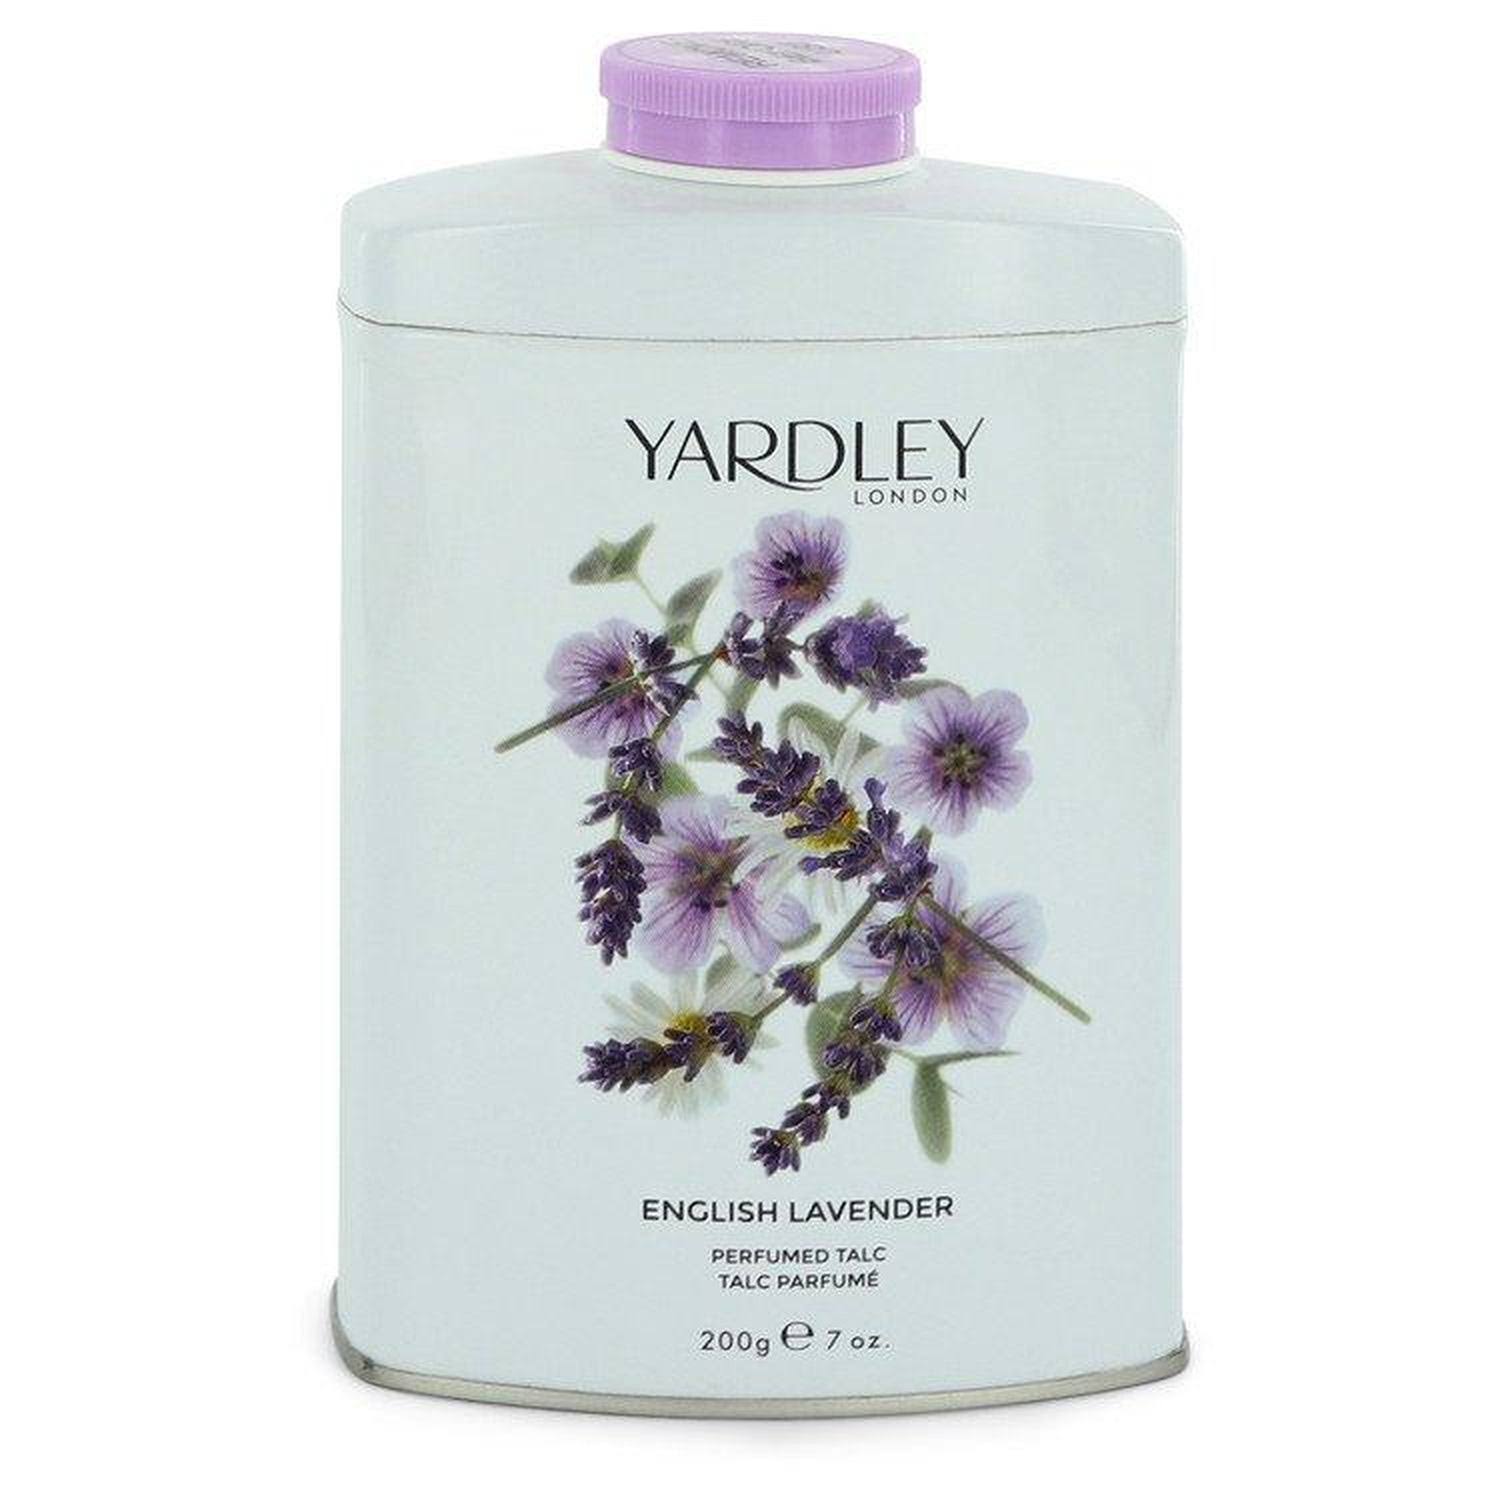 Yardley London Perfumed Talc - English Lavender, 200g